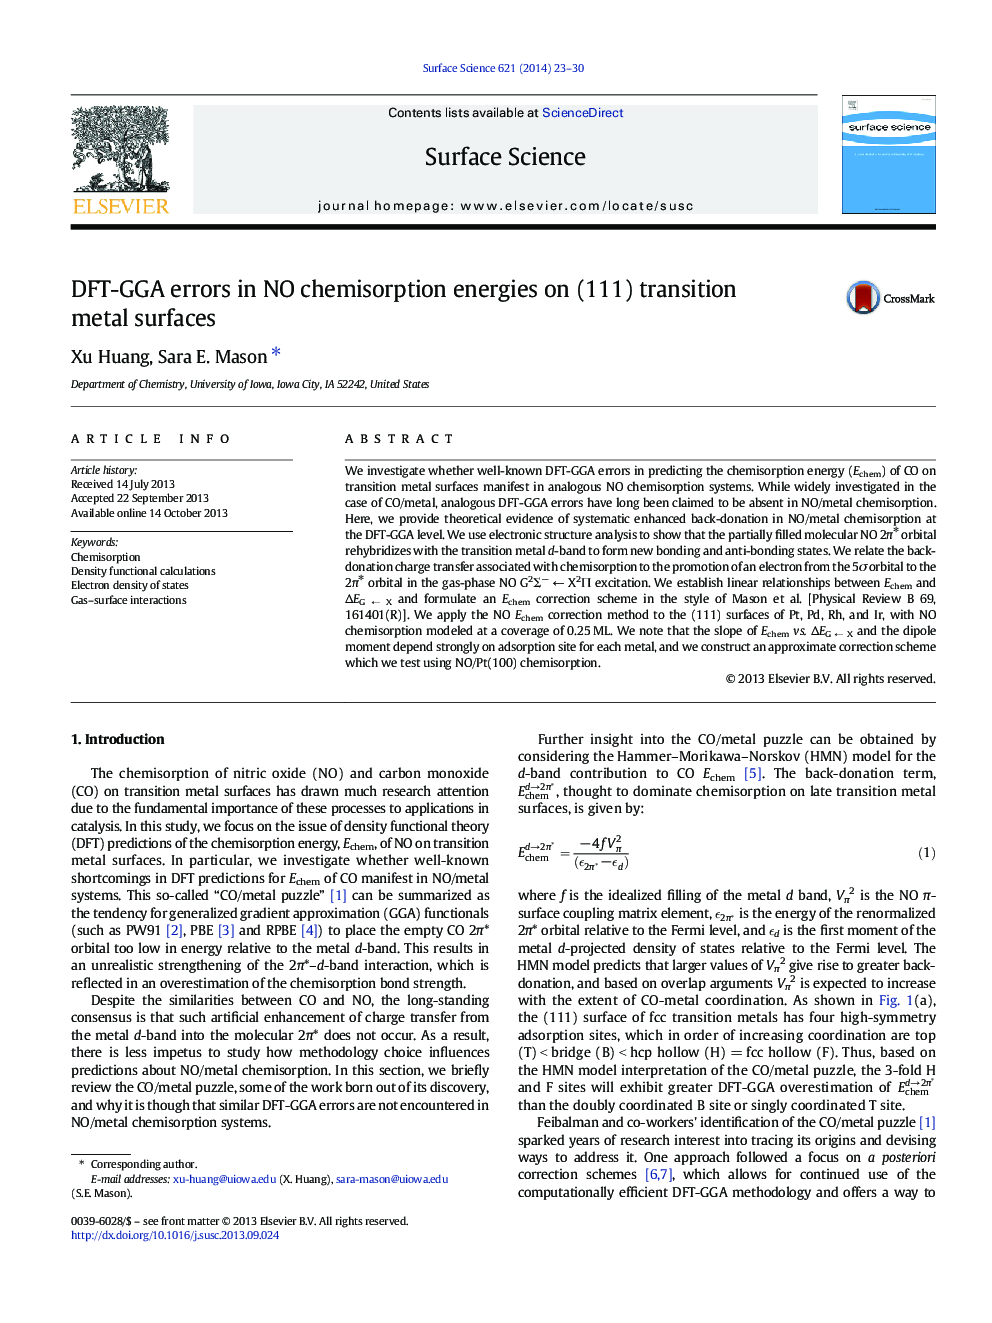 DFT-GGA errors in NO chemisorption energies on (111) transition metal surfaces